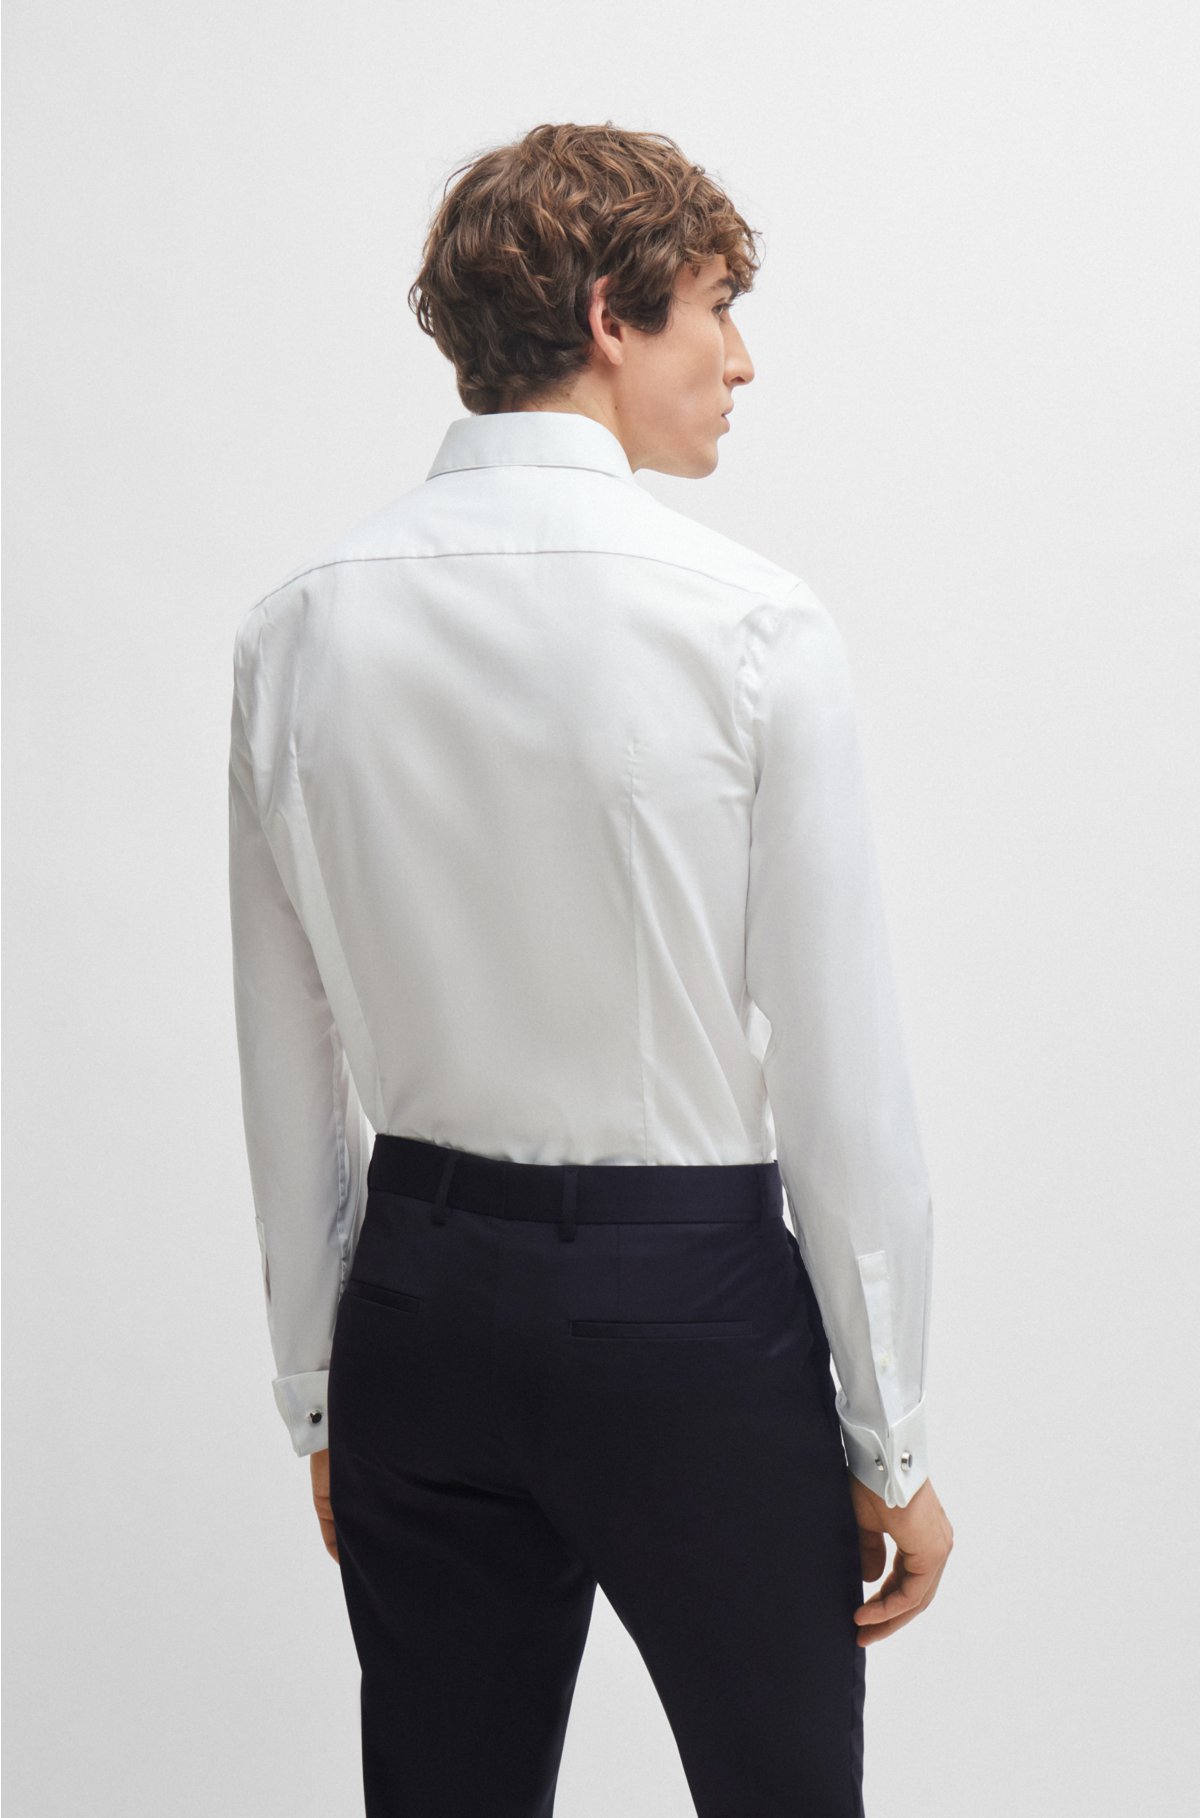 Slim-fit shirt in easy-iron stretch-cotton poplin, White